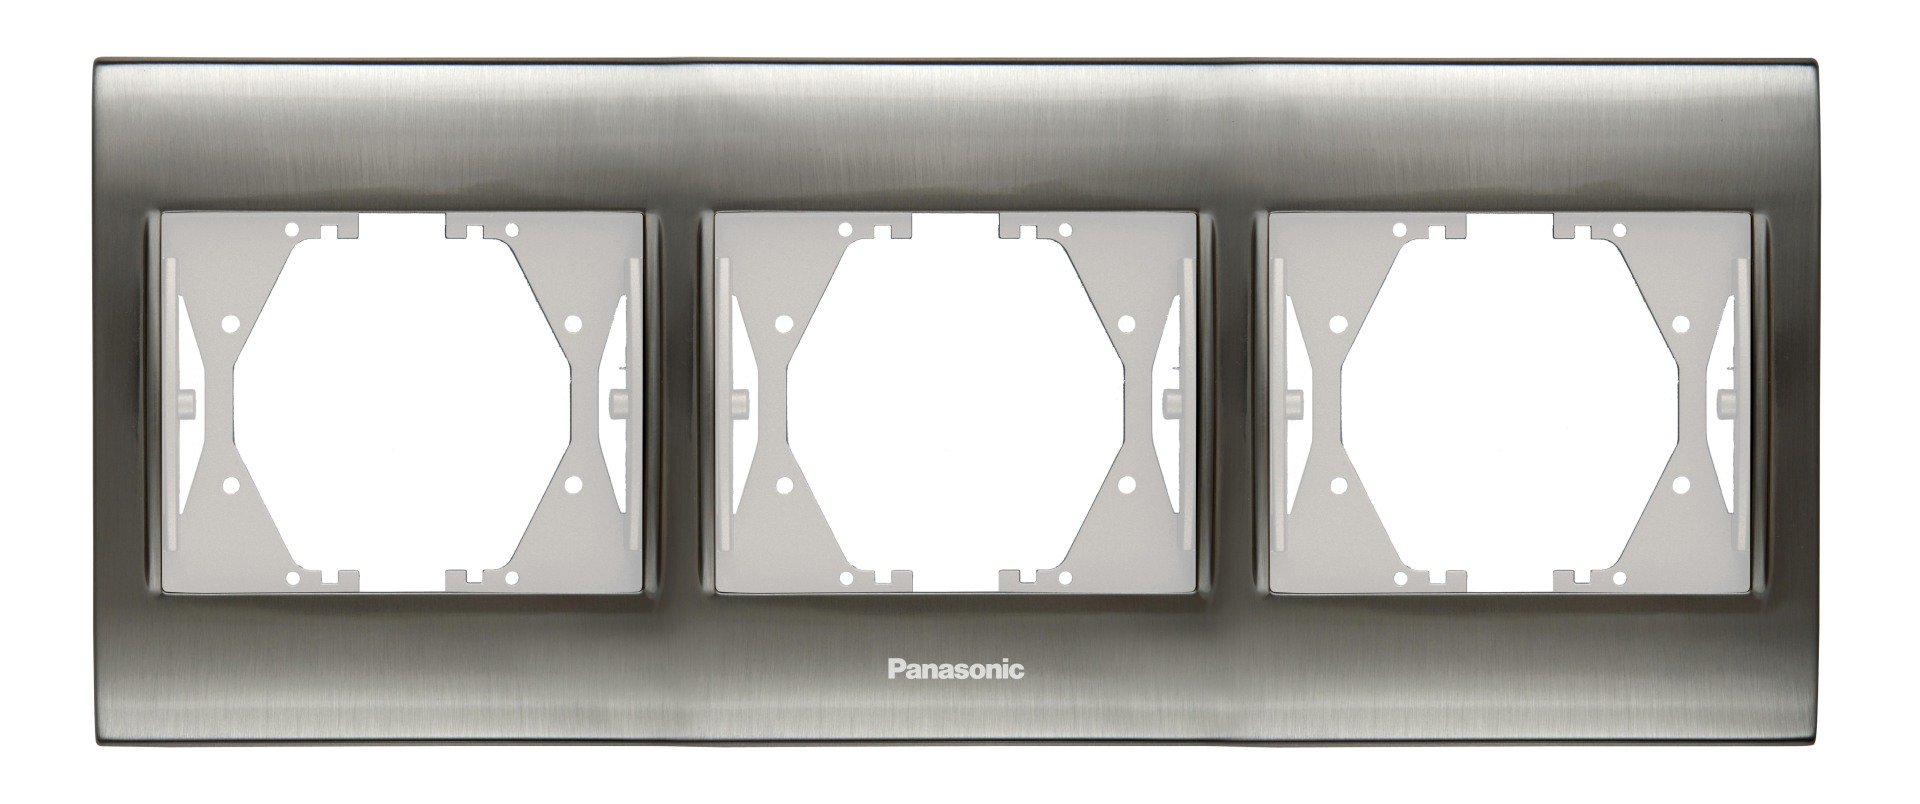 Panasonic Thea Blu Inox+Beyaz Üçlü Çerçeve  - WBTF08035IN-TR